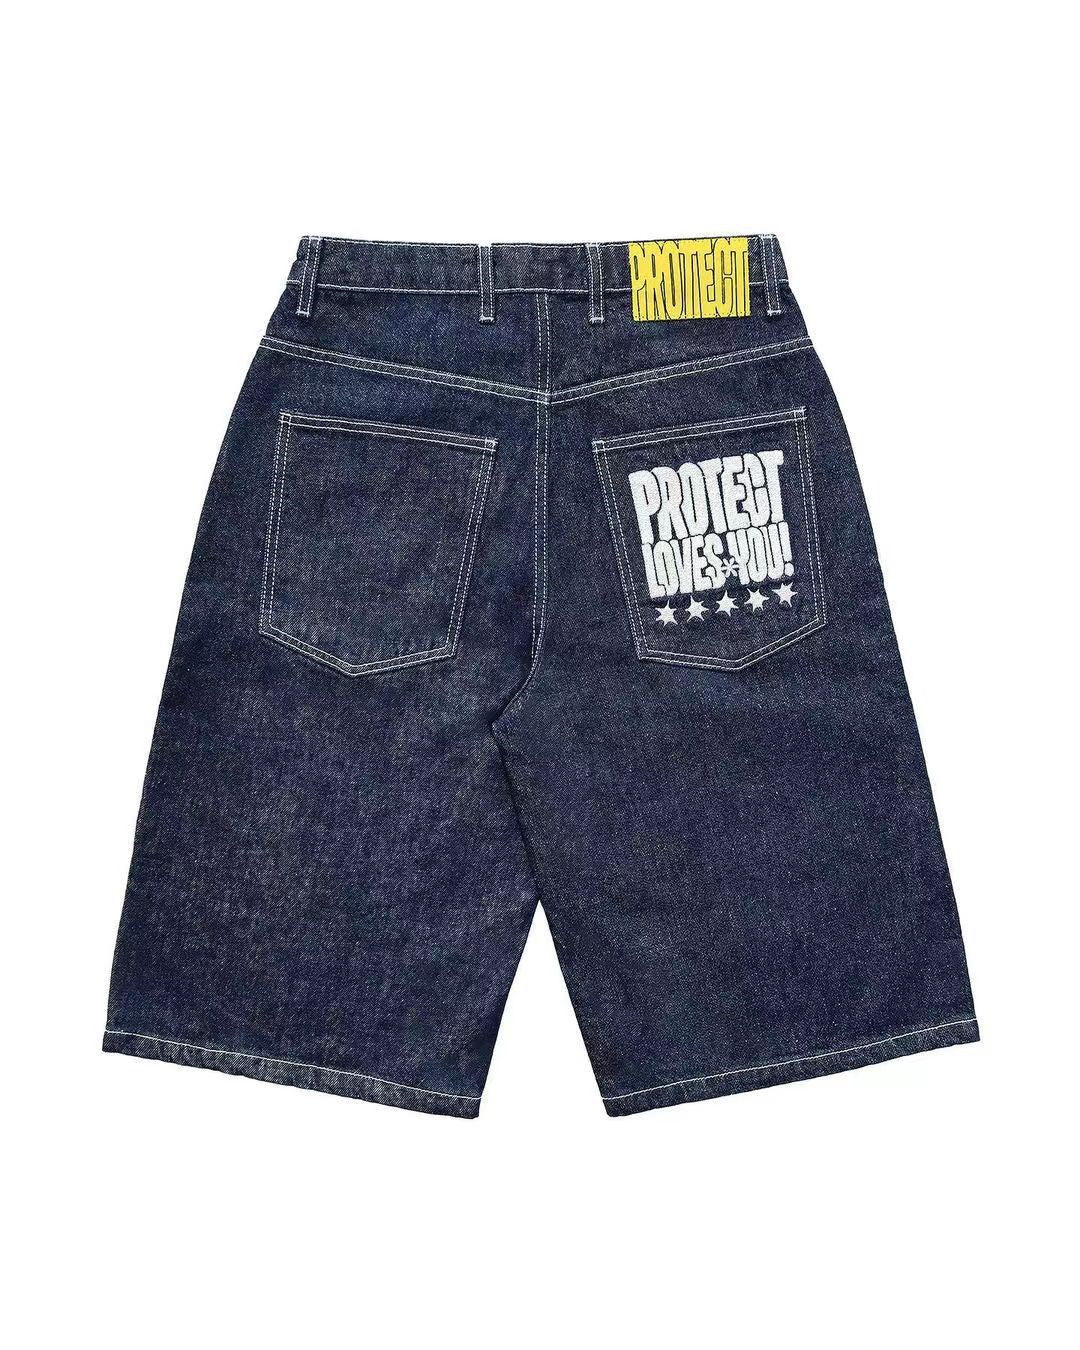 Full Embroidery Dark Blue Denim Shorts Men - Carvan Mart Ltd